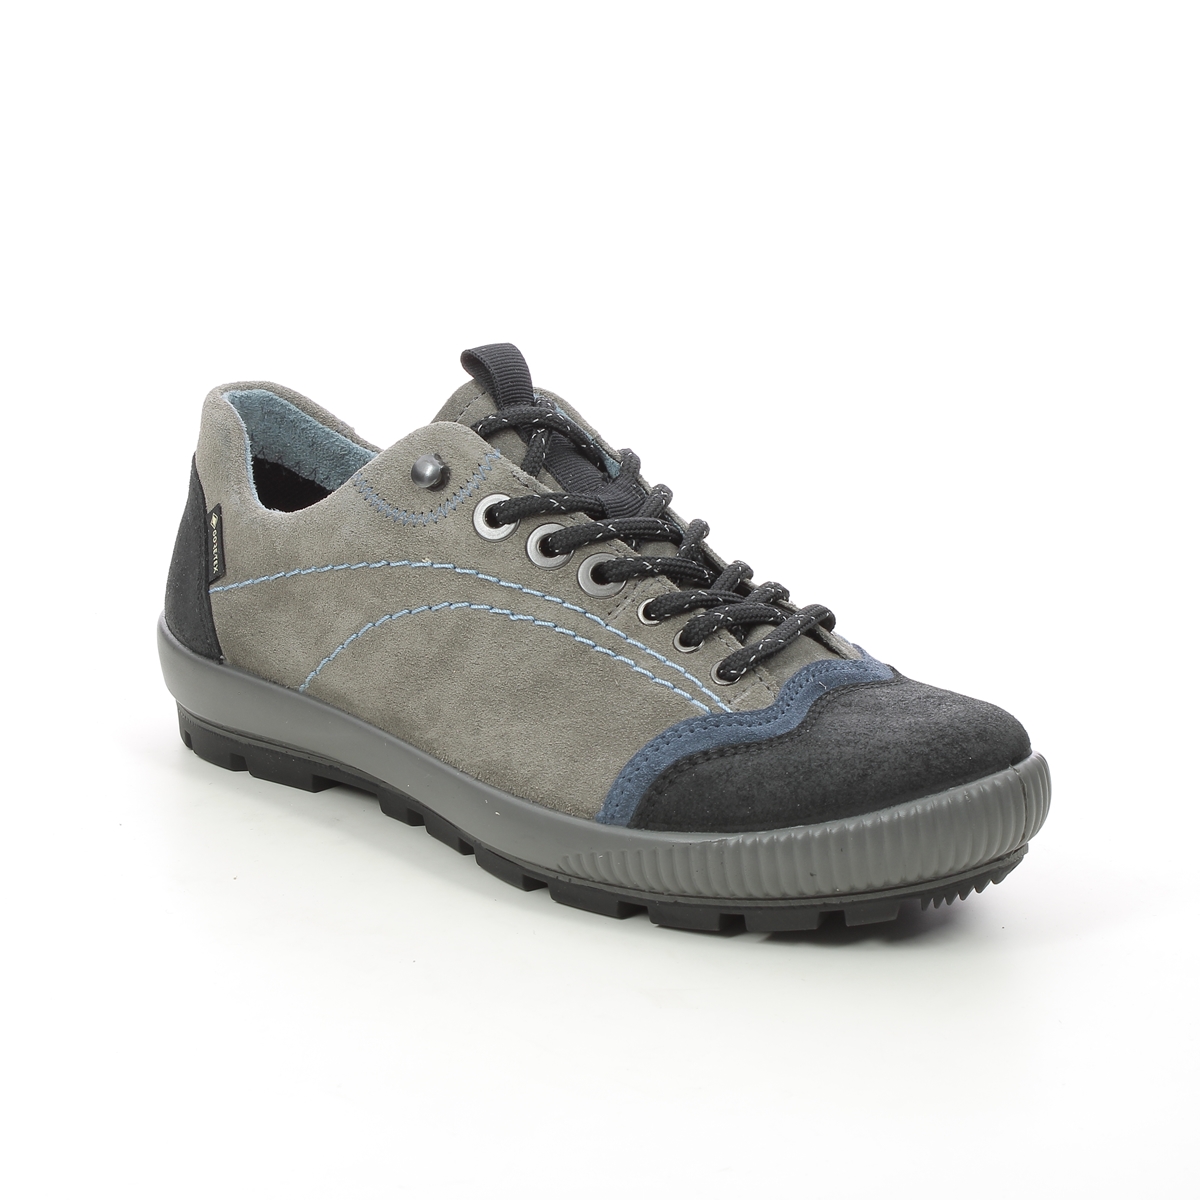 Legero Tanaro Trek Gtx Grey Suede Womens Walking Shoes 2000122-2800 In Size 4.5 In Plain Grey Suede